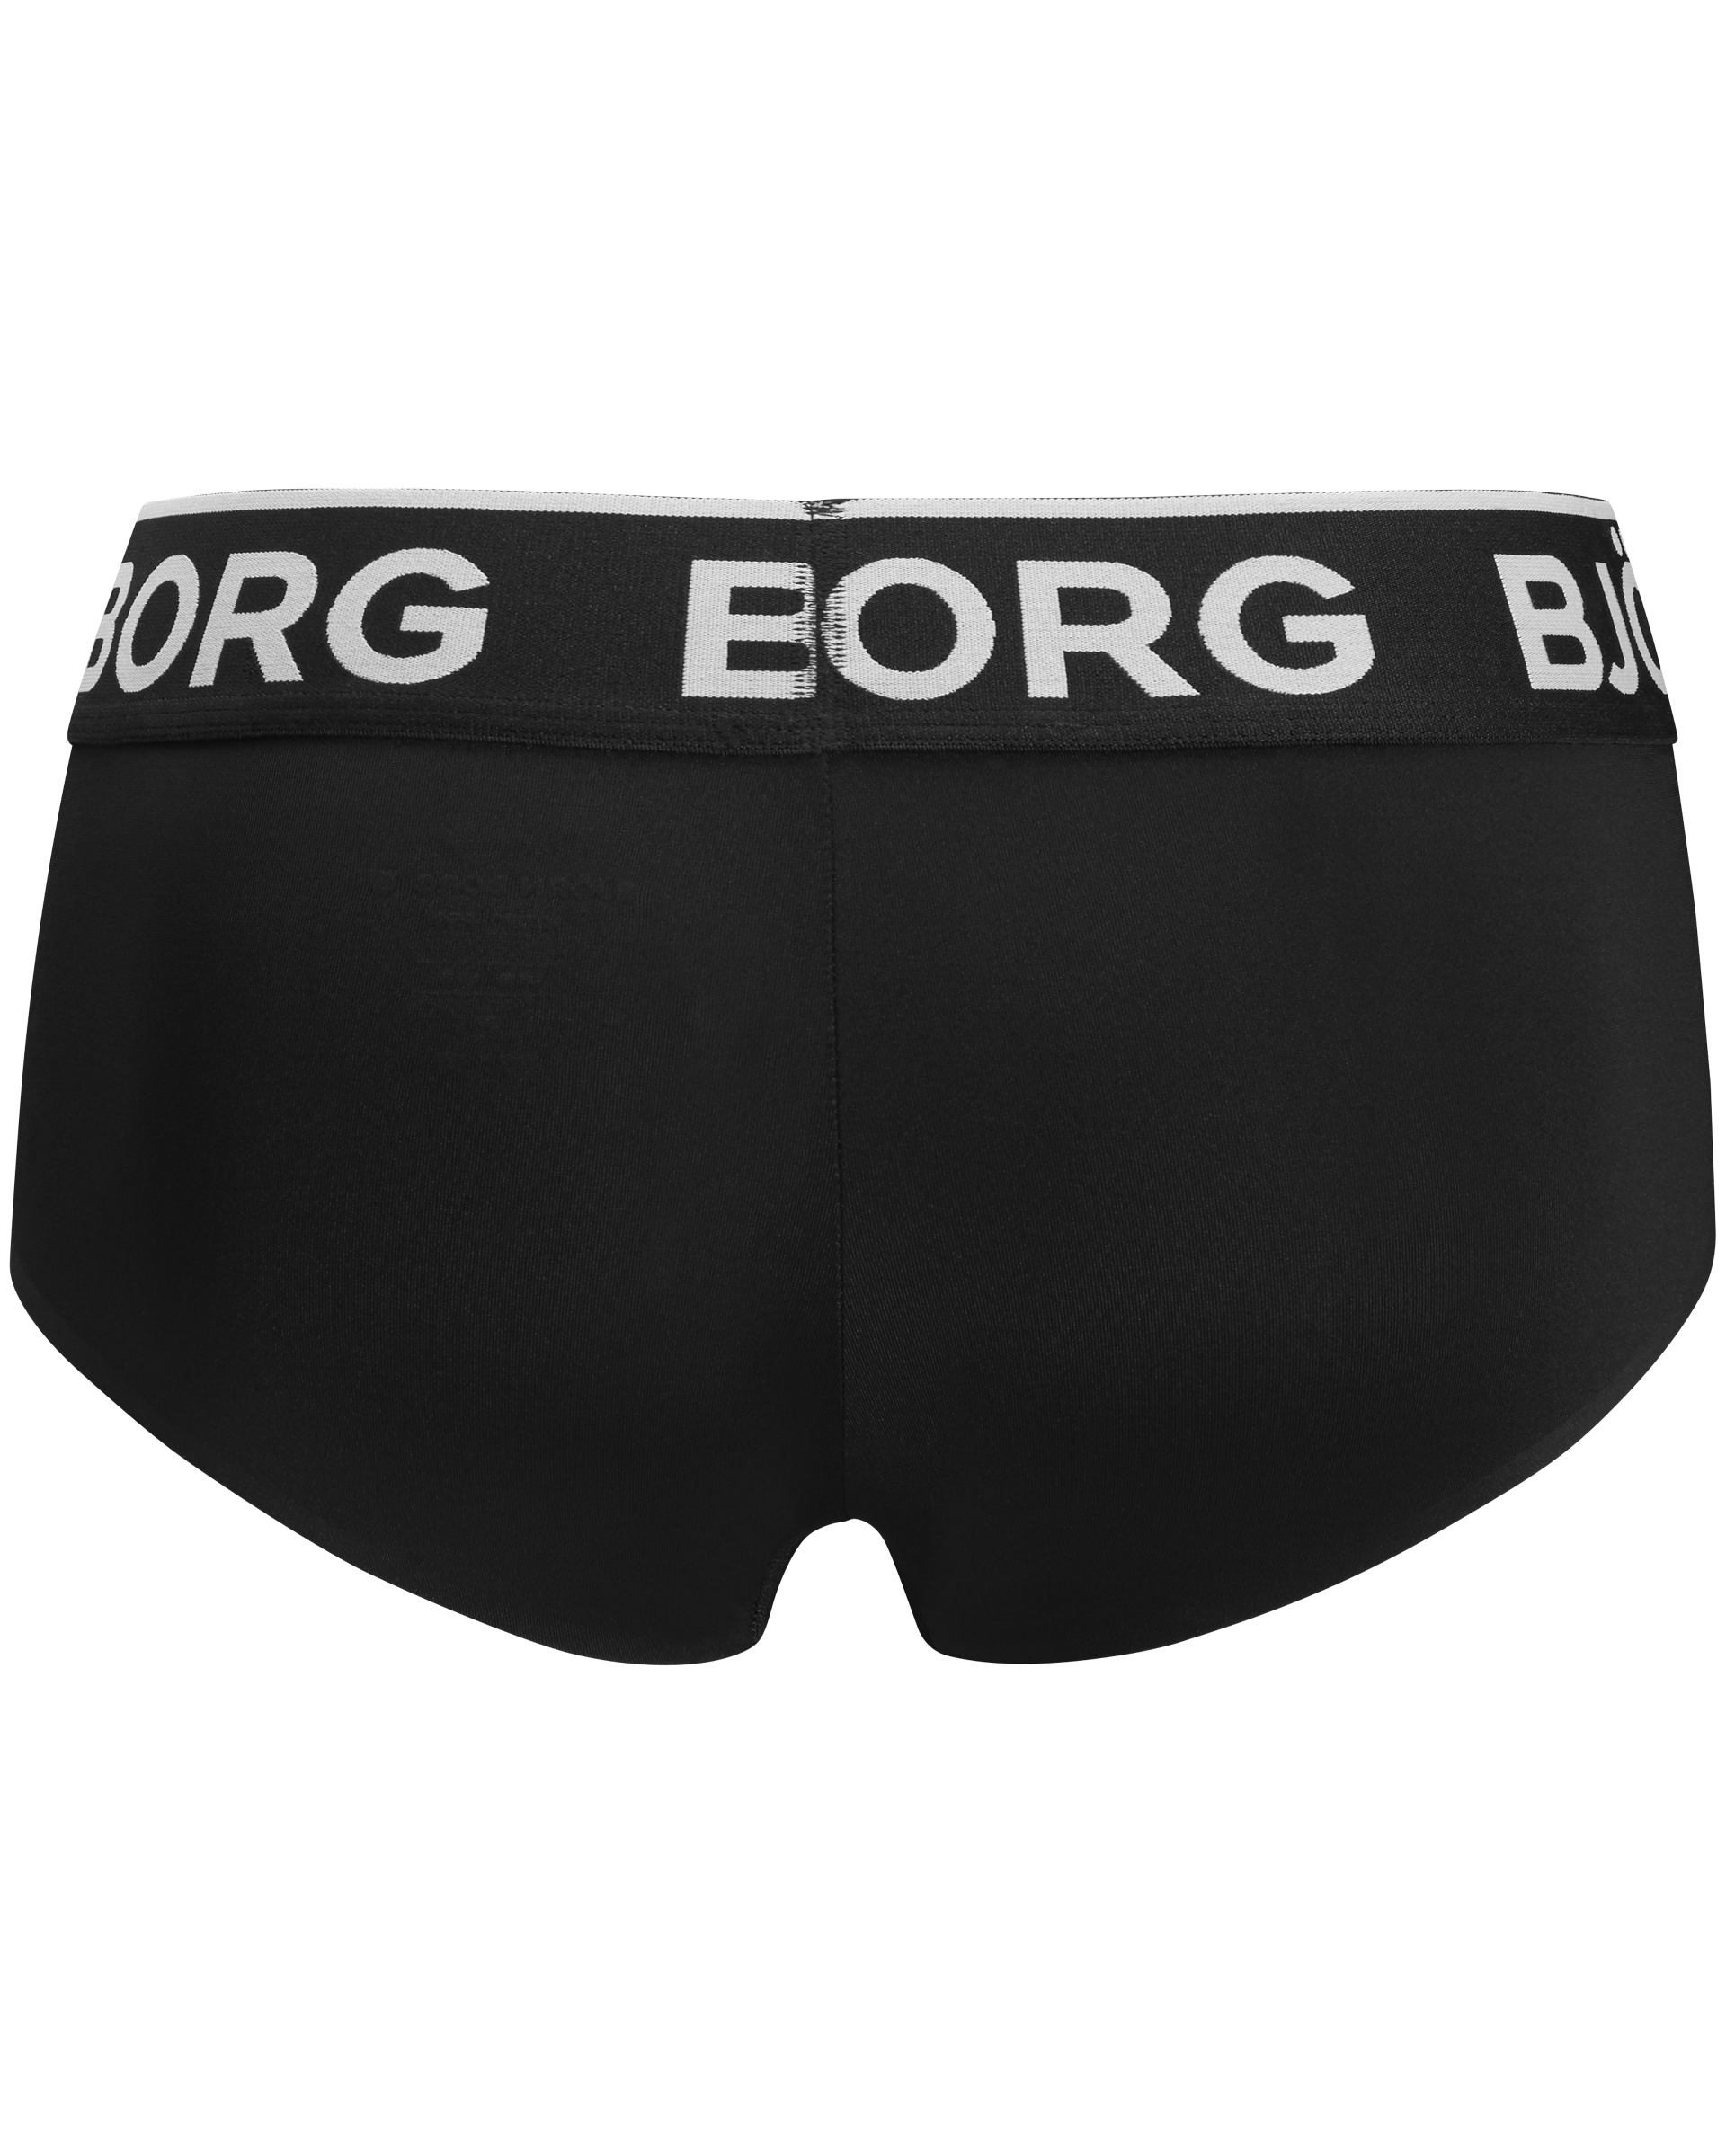 Bjorn Borg Minishorts Noos Solids Boo - Black Beauty